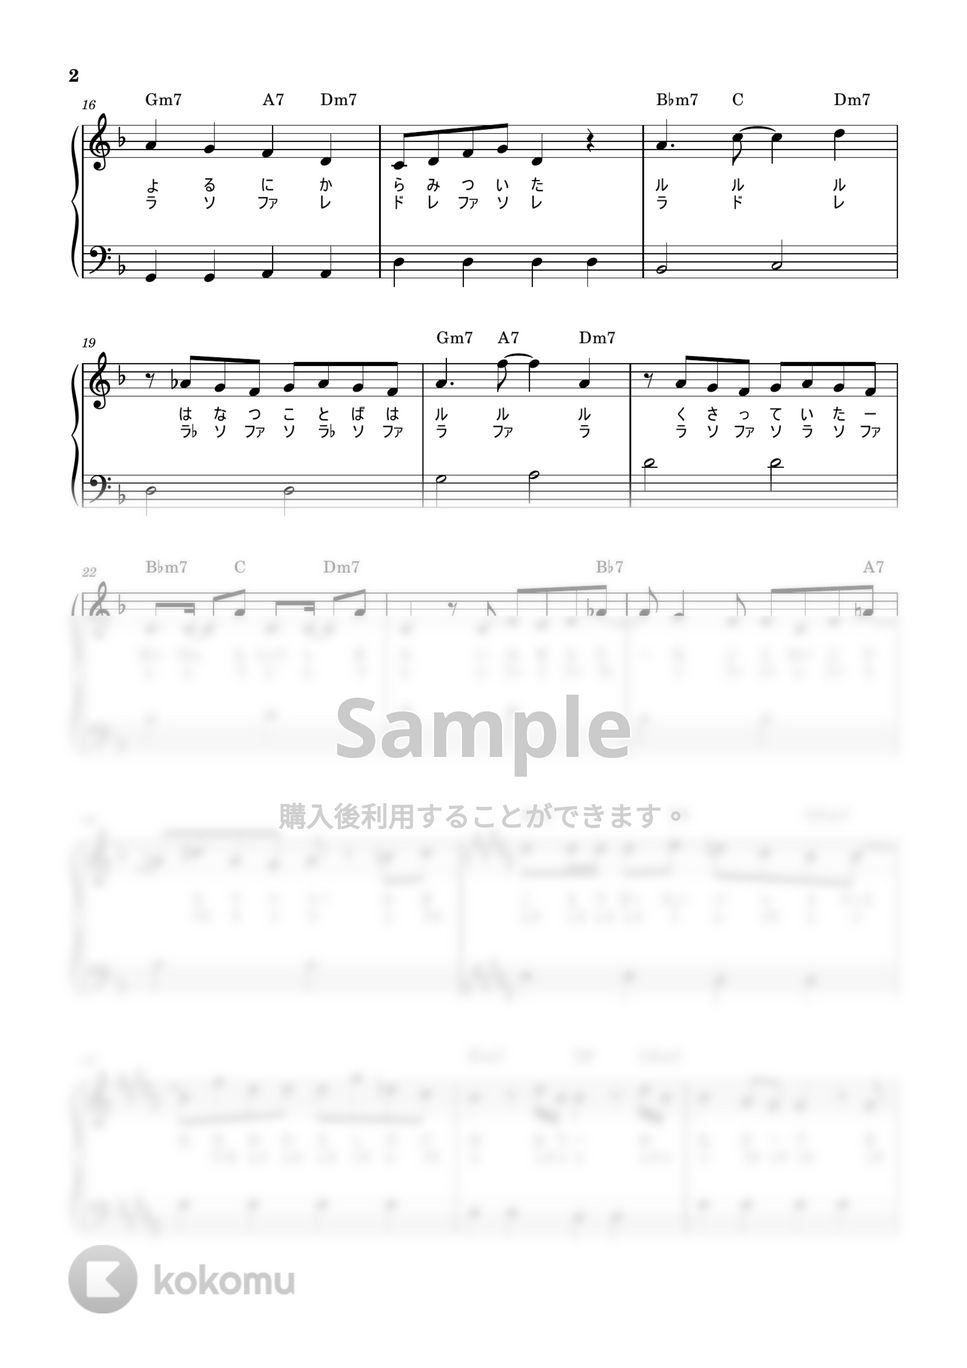 Chinozo feat. FloweR - グッバイ宣言 (かんたん / 歌詞付き / ドレミ付き / 初心者) by piano.tokyo